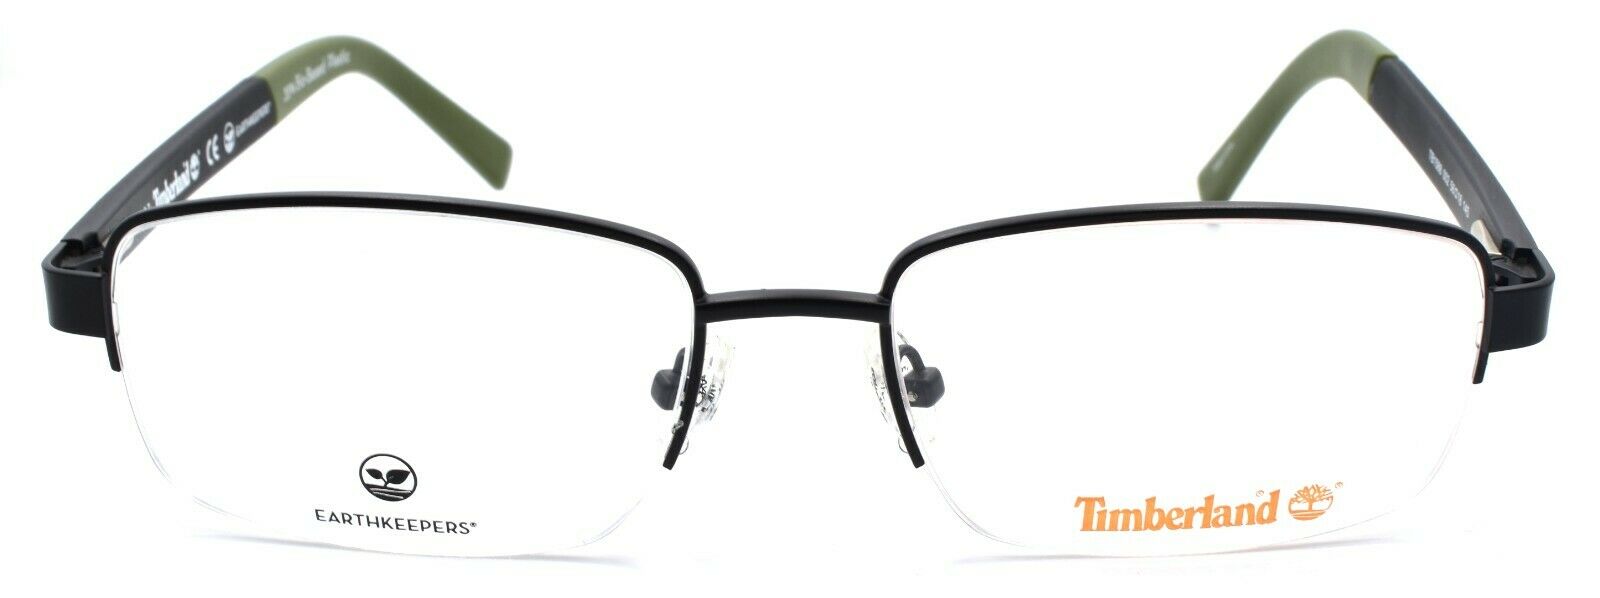 2-TIMBERLAND TB1588 002 Men's Eyeglasses Frames Half-rim 56-18-145 Matte Black-664689933938-IKSpecs